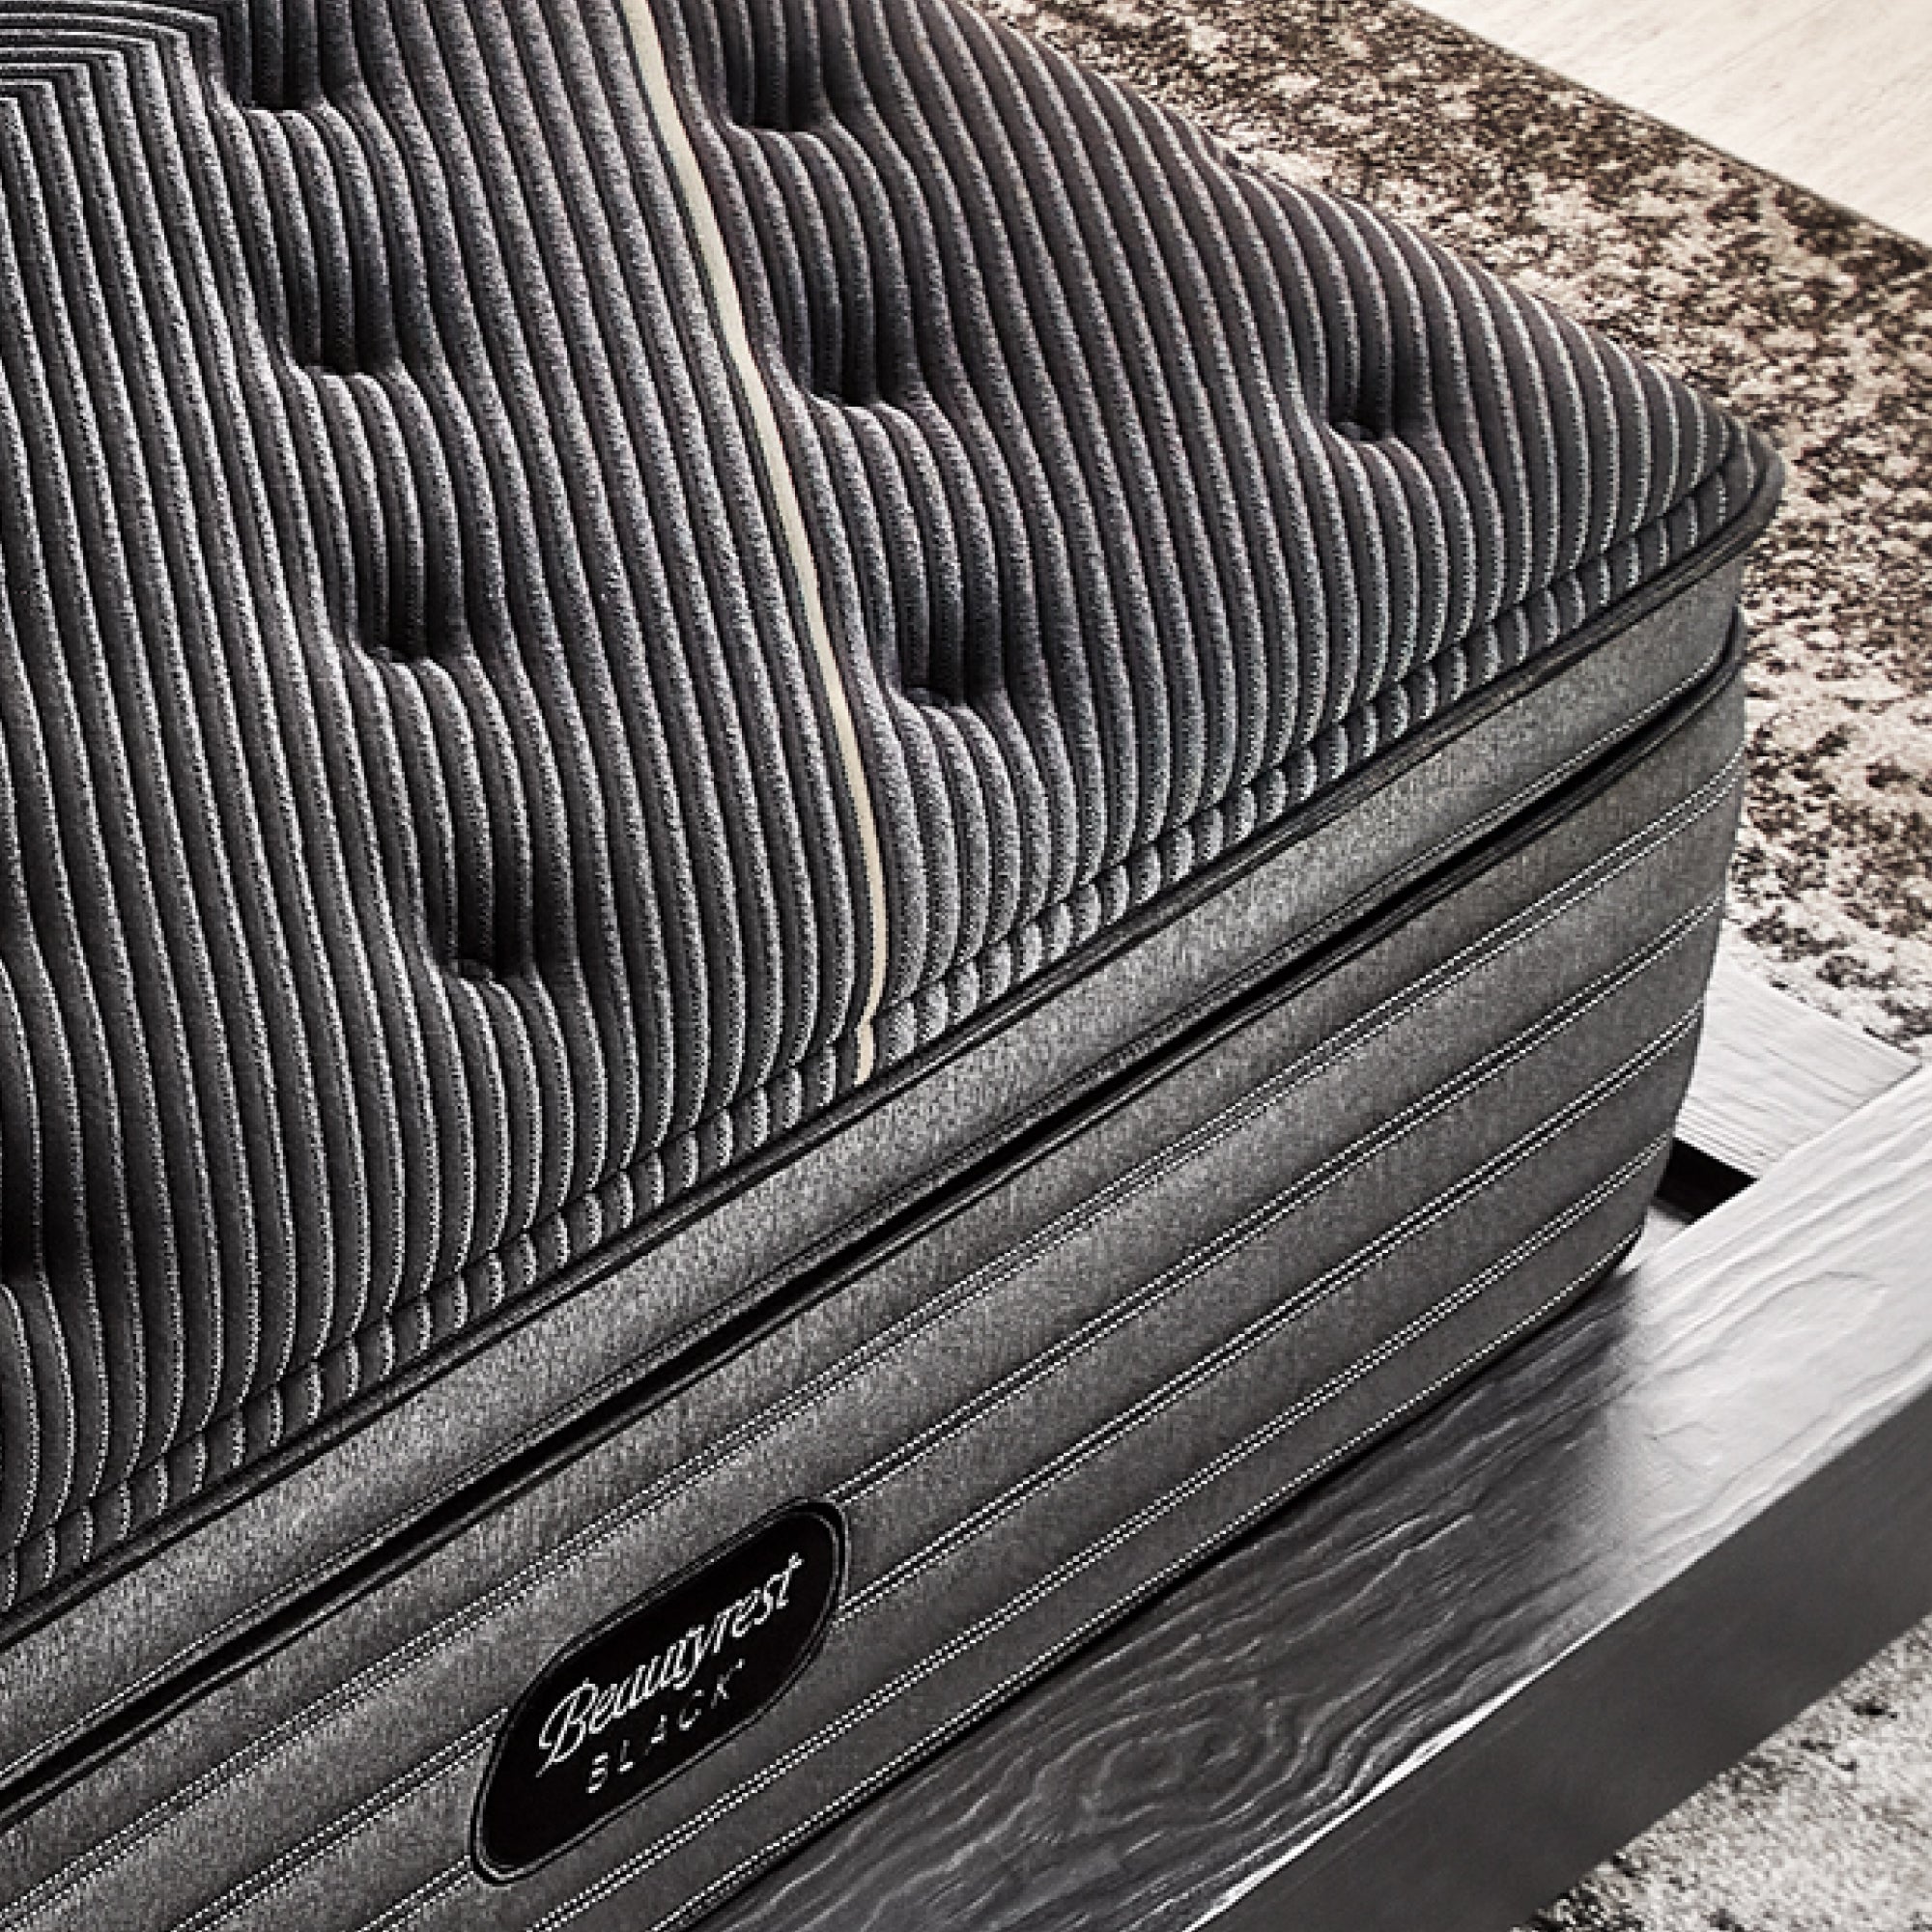 Corner view of the Beautyrest Black exceptional k-class mattress||series: exceptional k-class